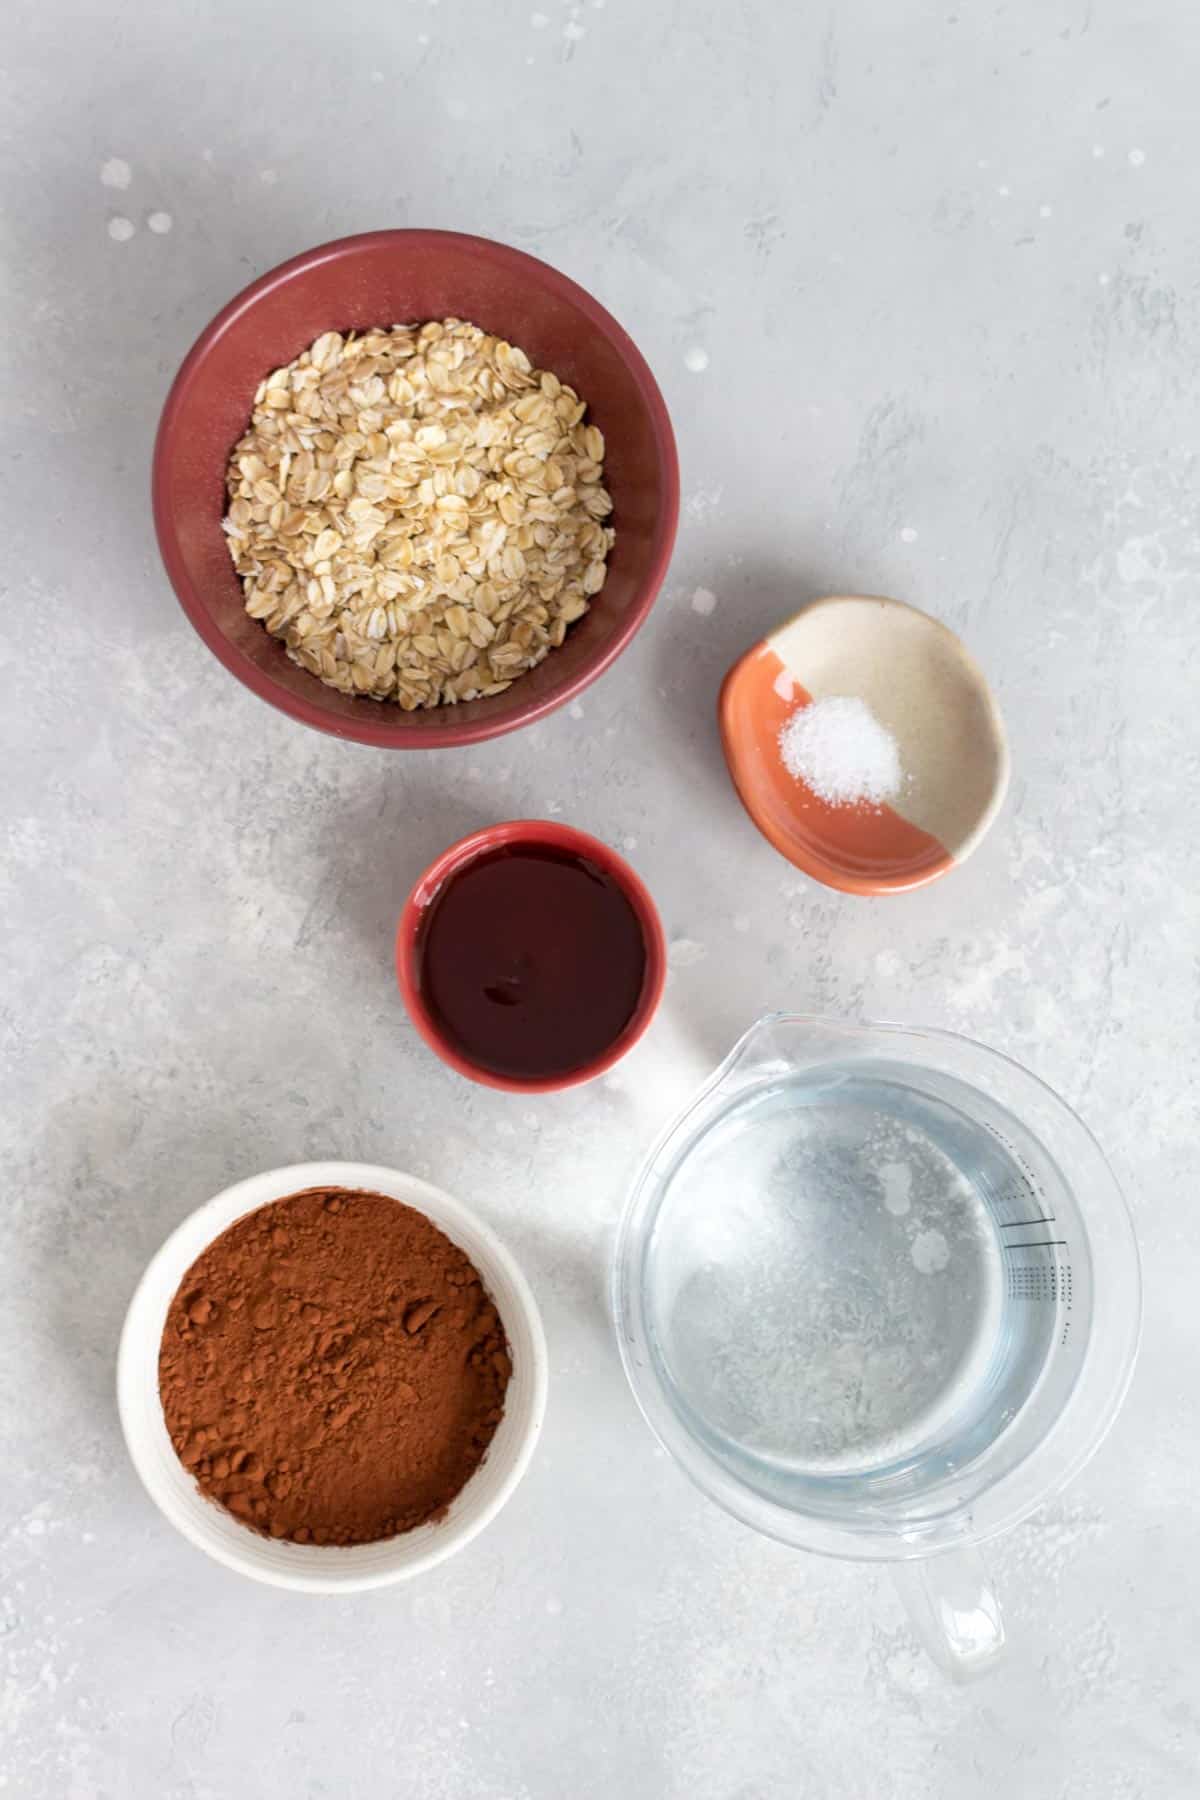 Ingredients needed to make chocolate oat milk.